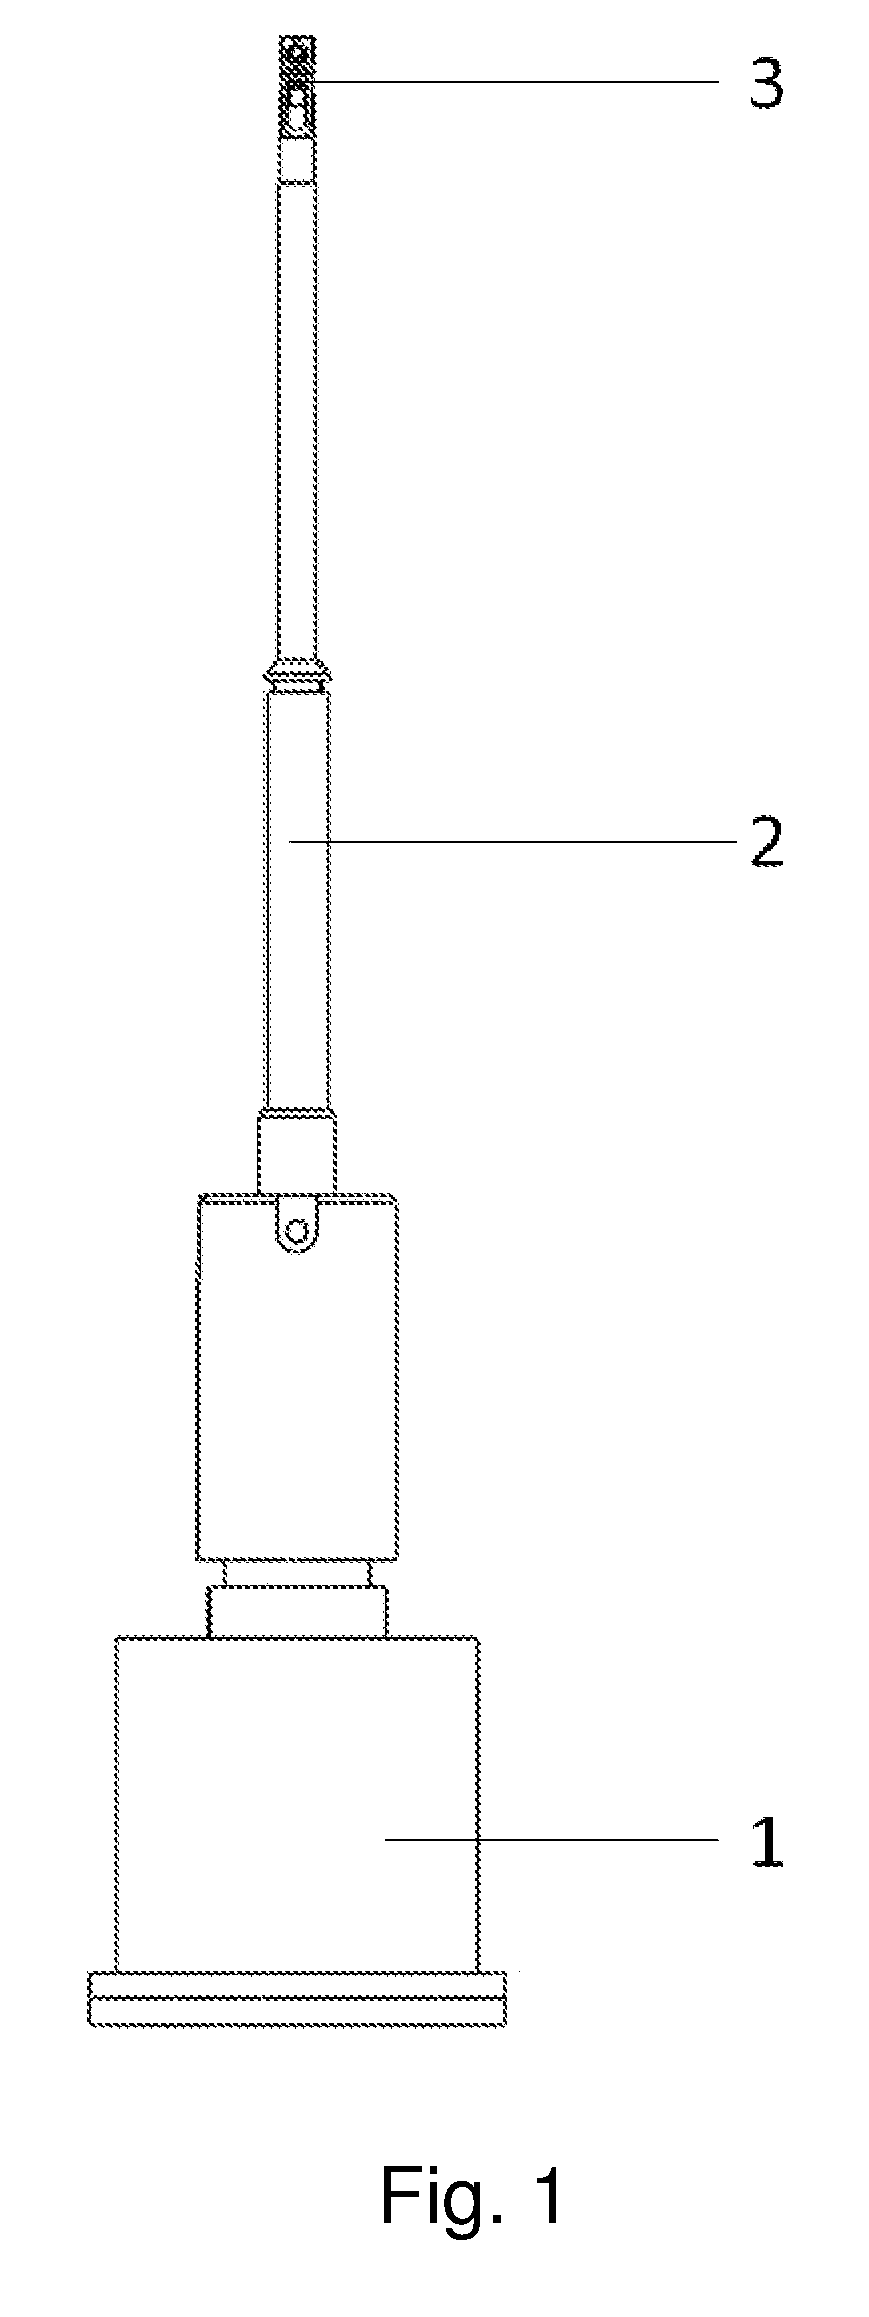 Double-tilt in-situ mechanical sample holder for TEM based on piezoelectric ceramic drive